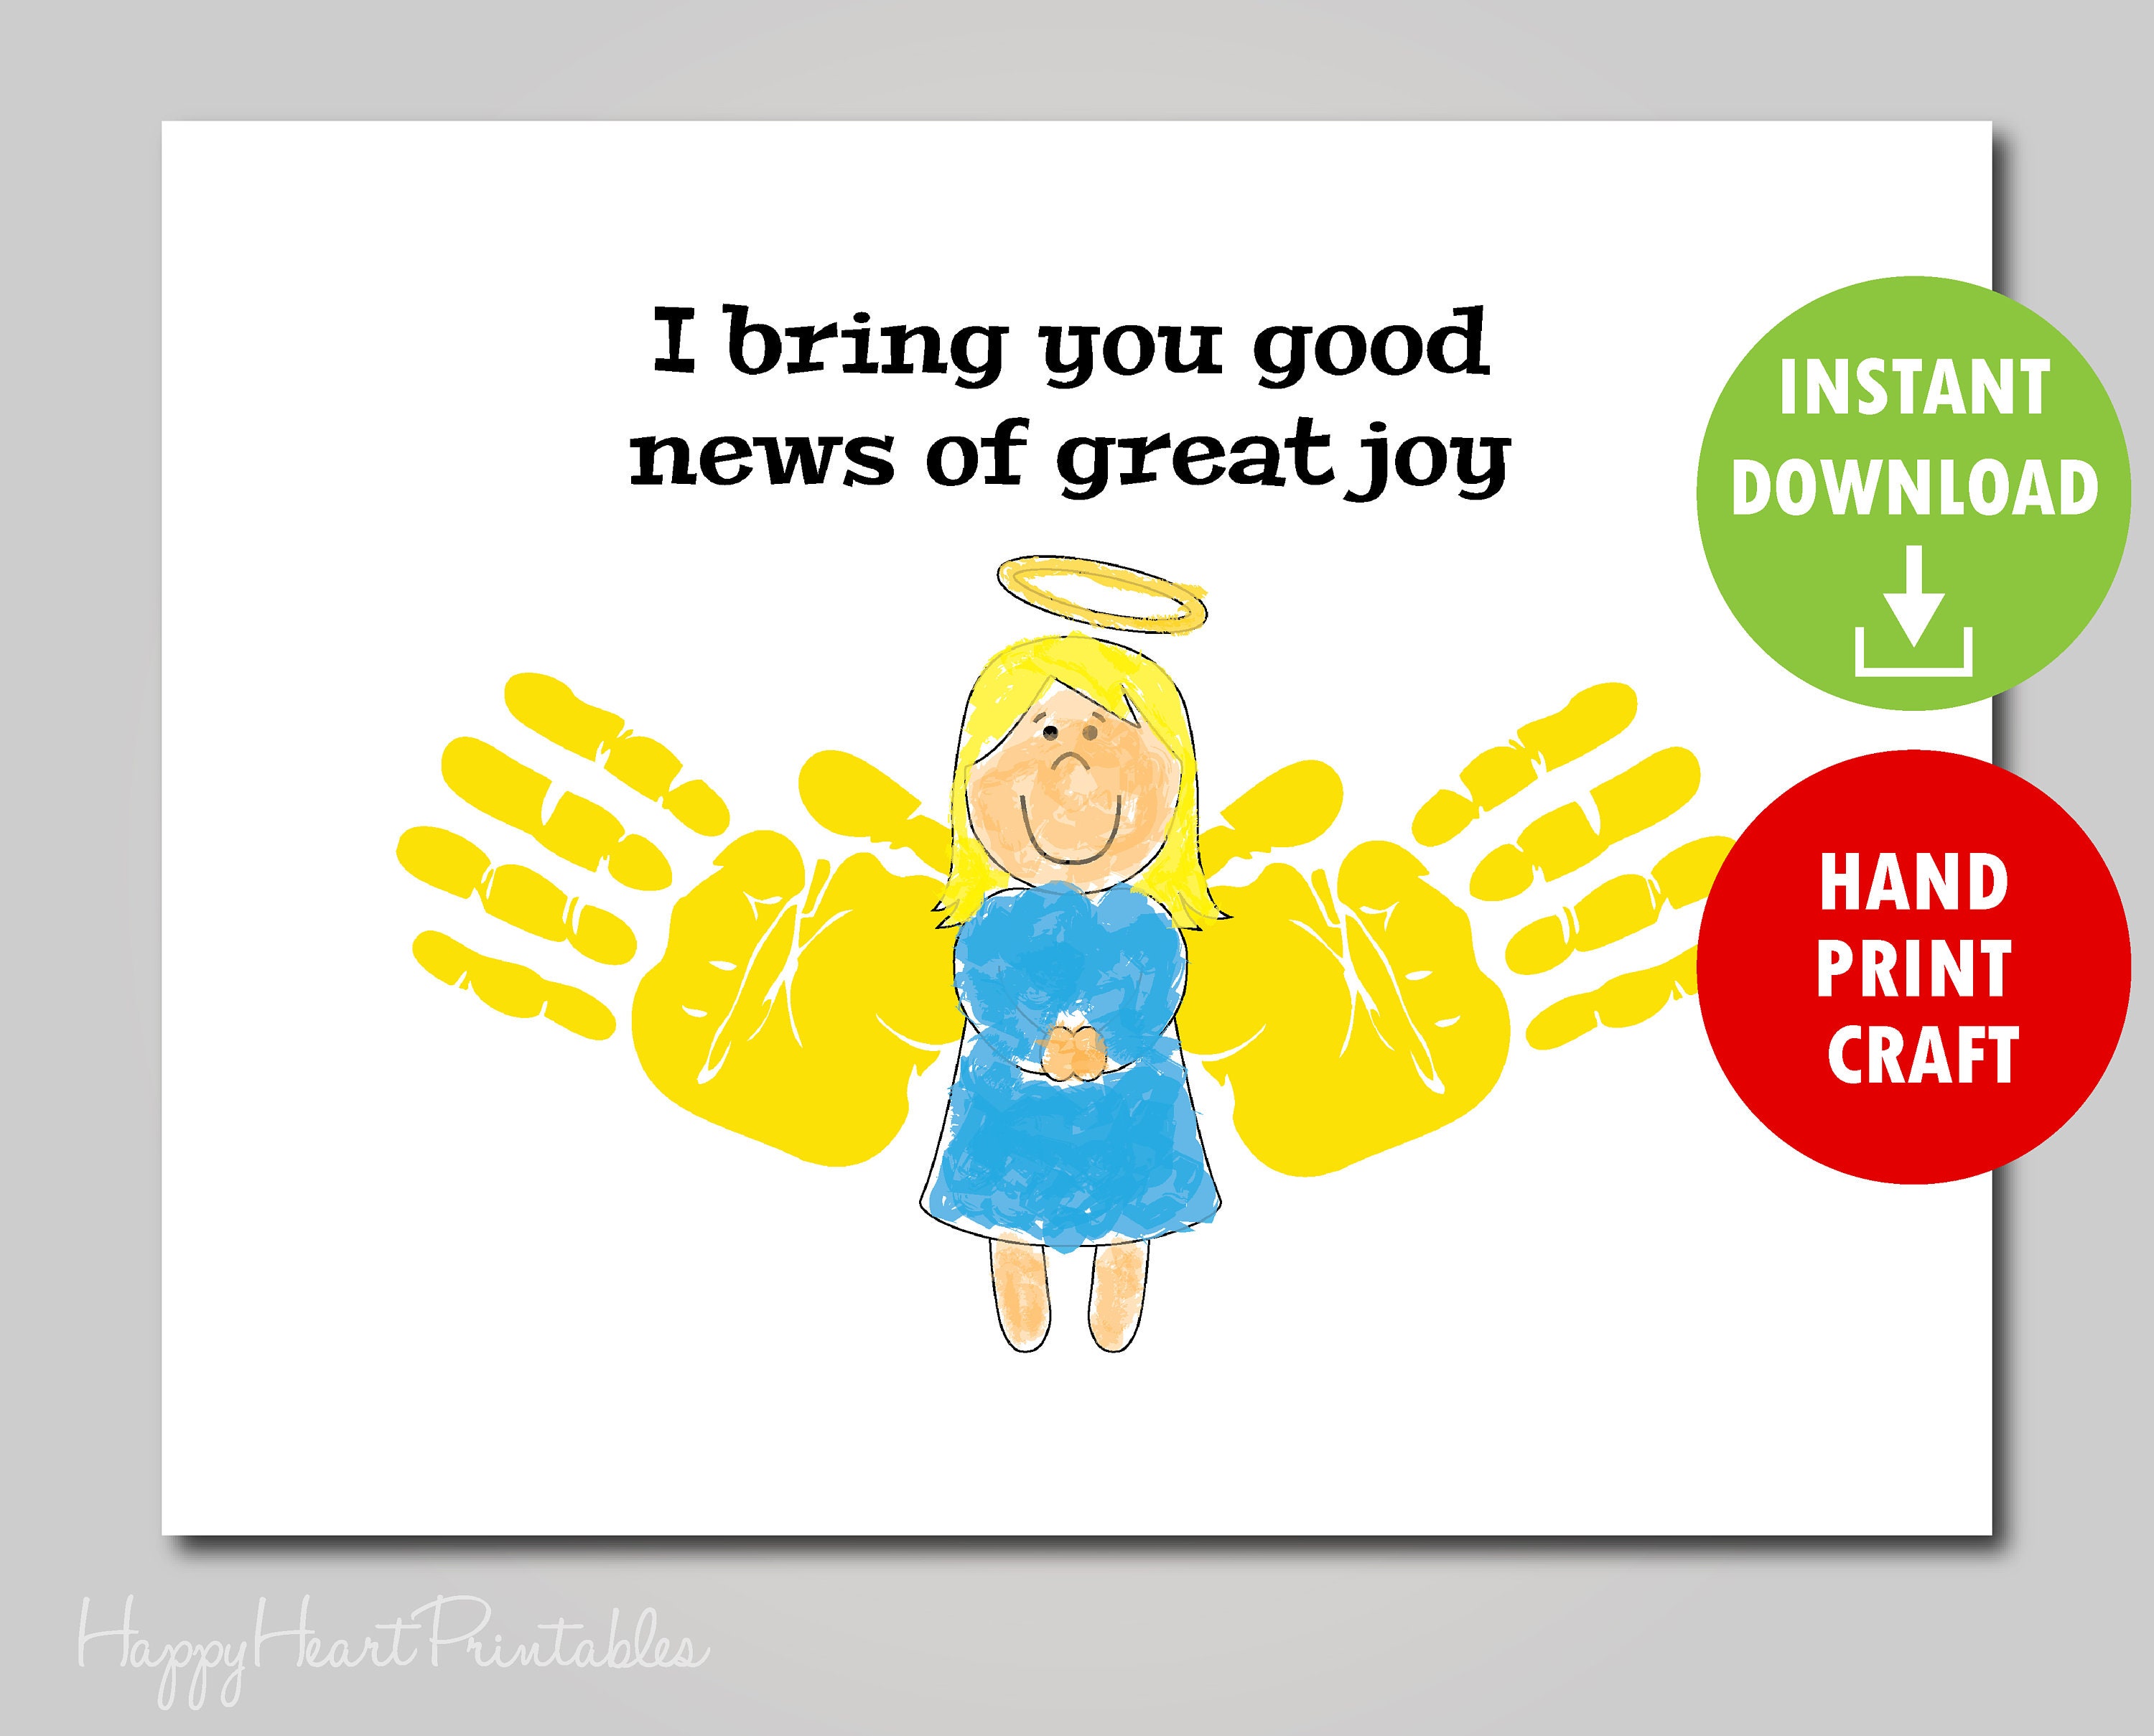 53 Fun Handprint Crafts For Kids [Free Templates]